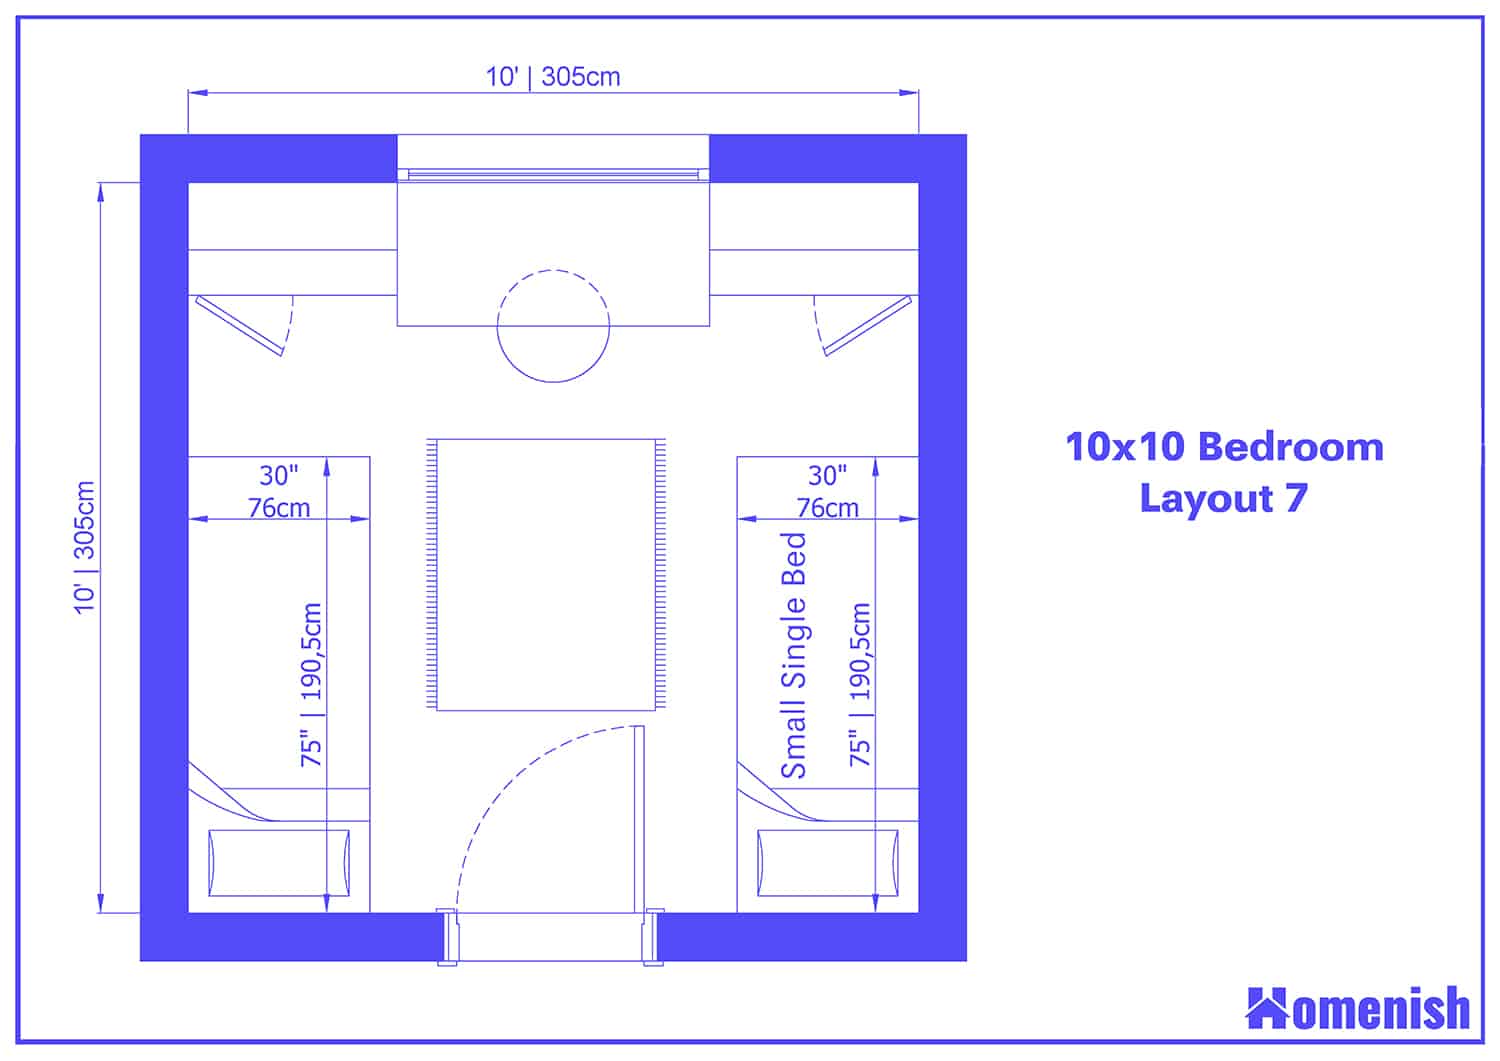 10x10 Bedroom Layout 7